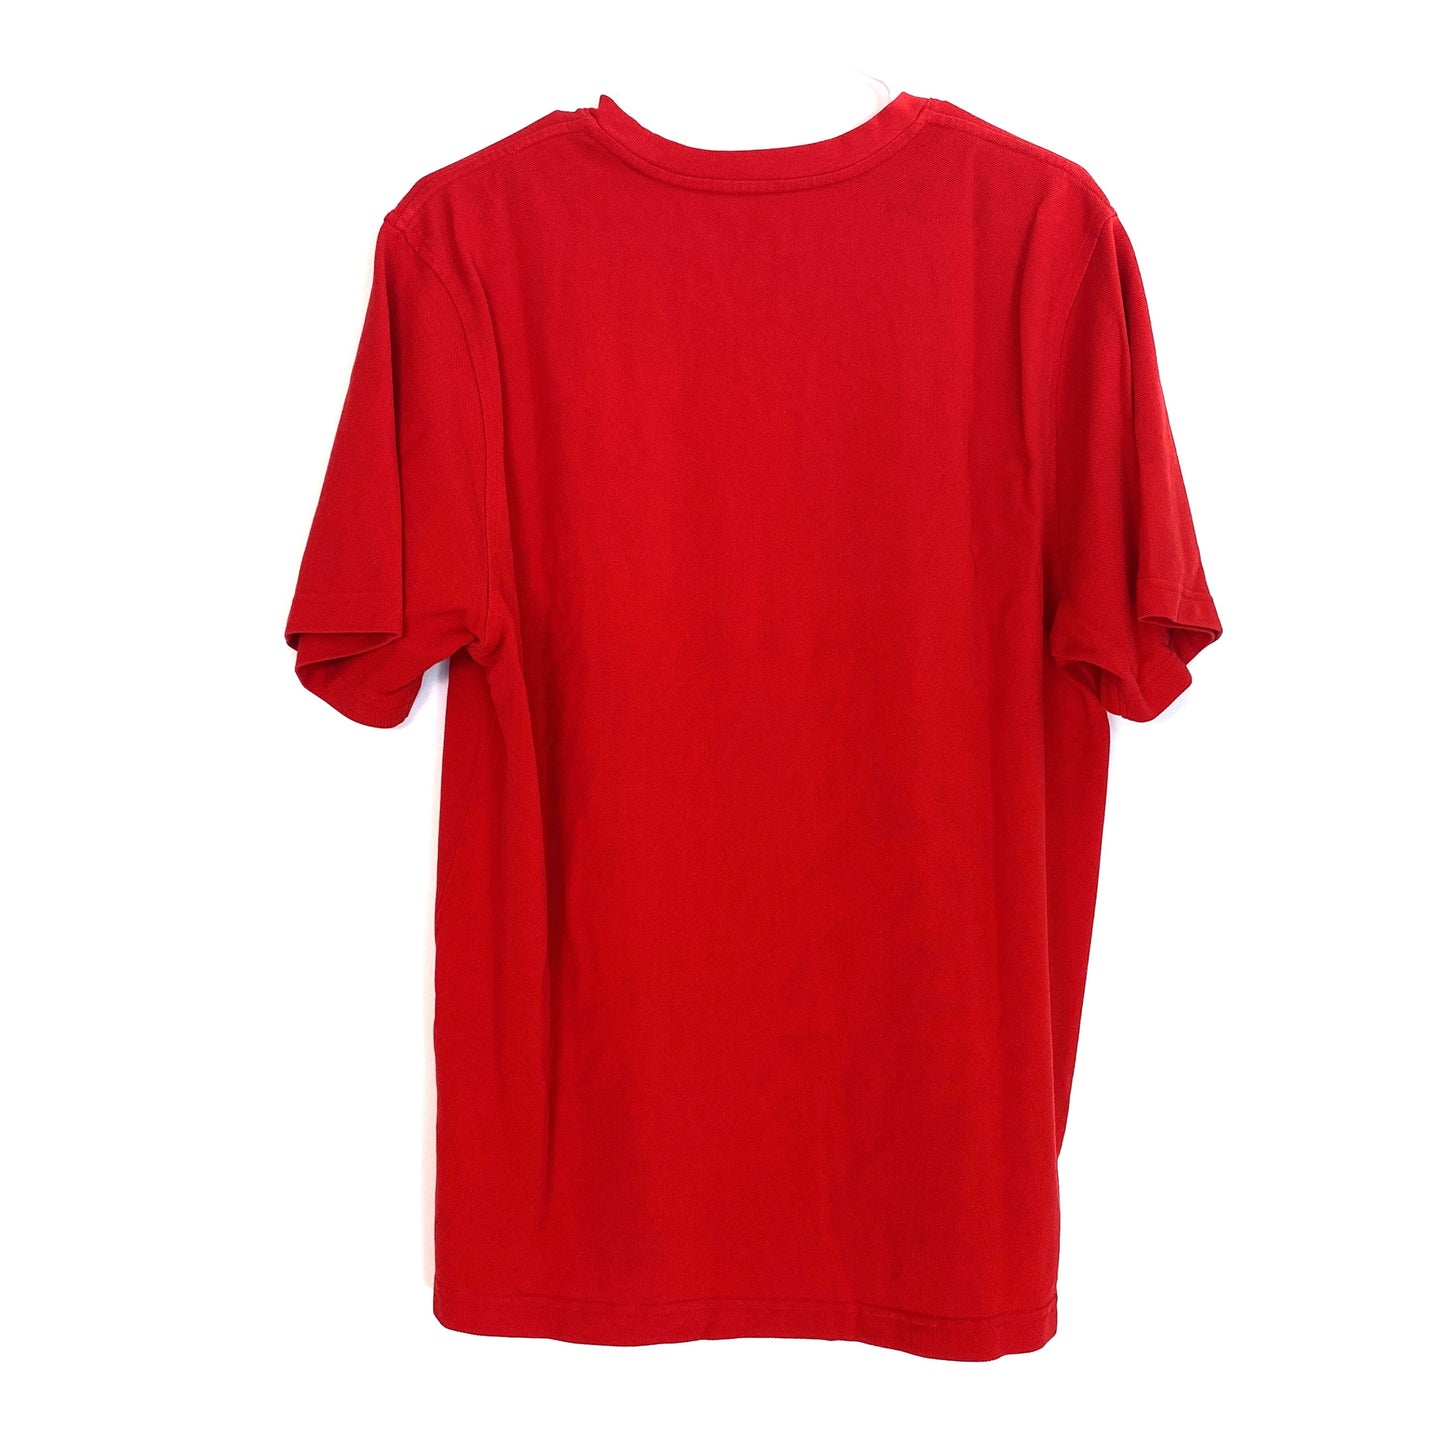 Stylish Apple Mens Red Cotton T-Shirt Short Sleeve L